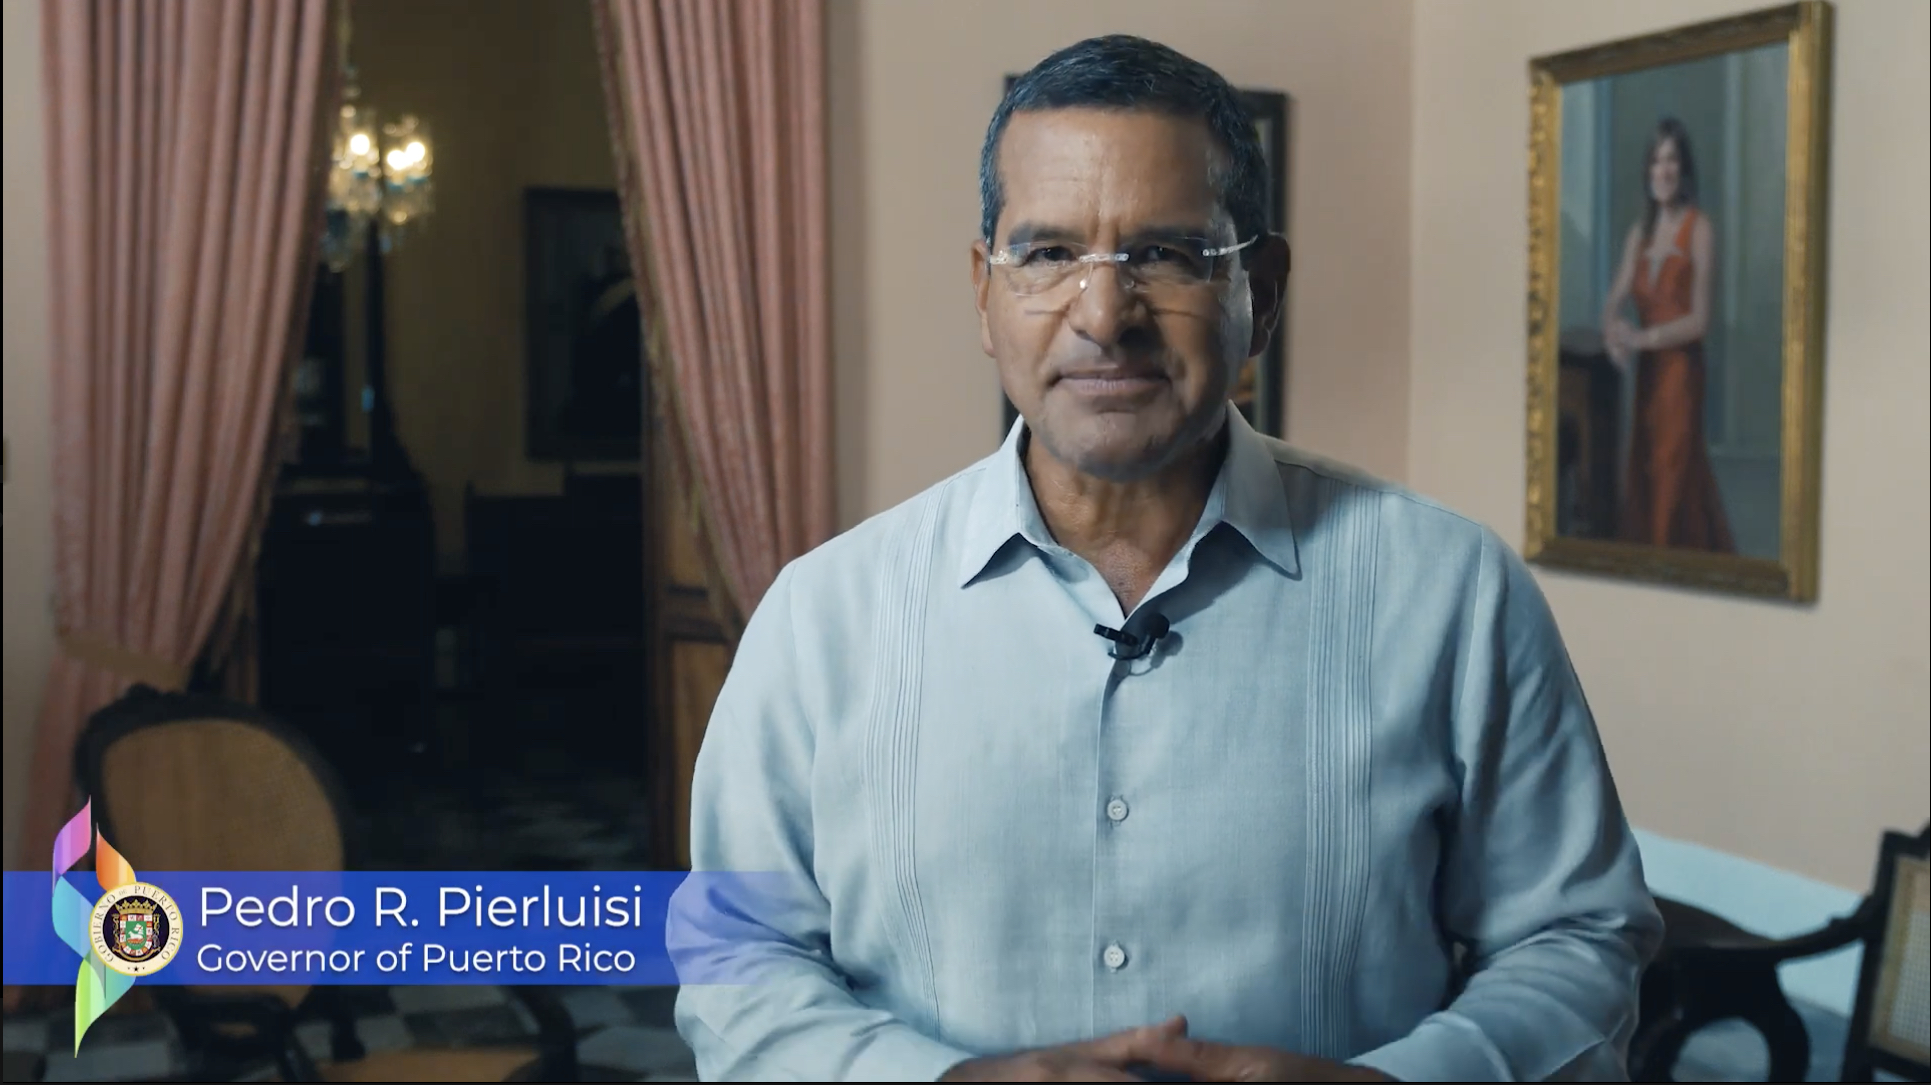 Governor of Puerto Rico Pedro R. Pierluisi